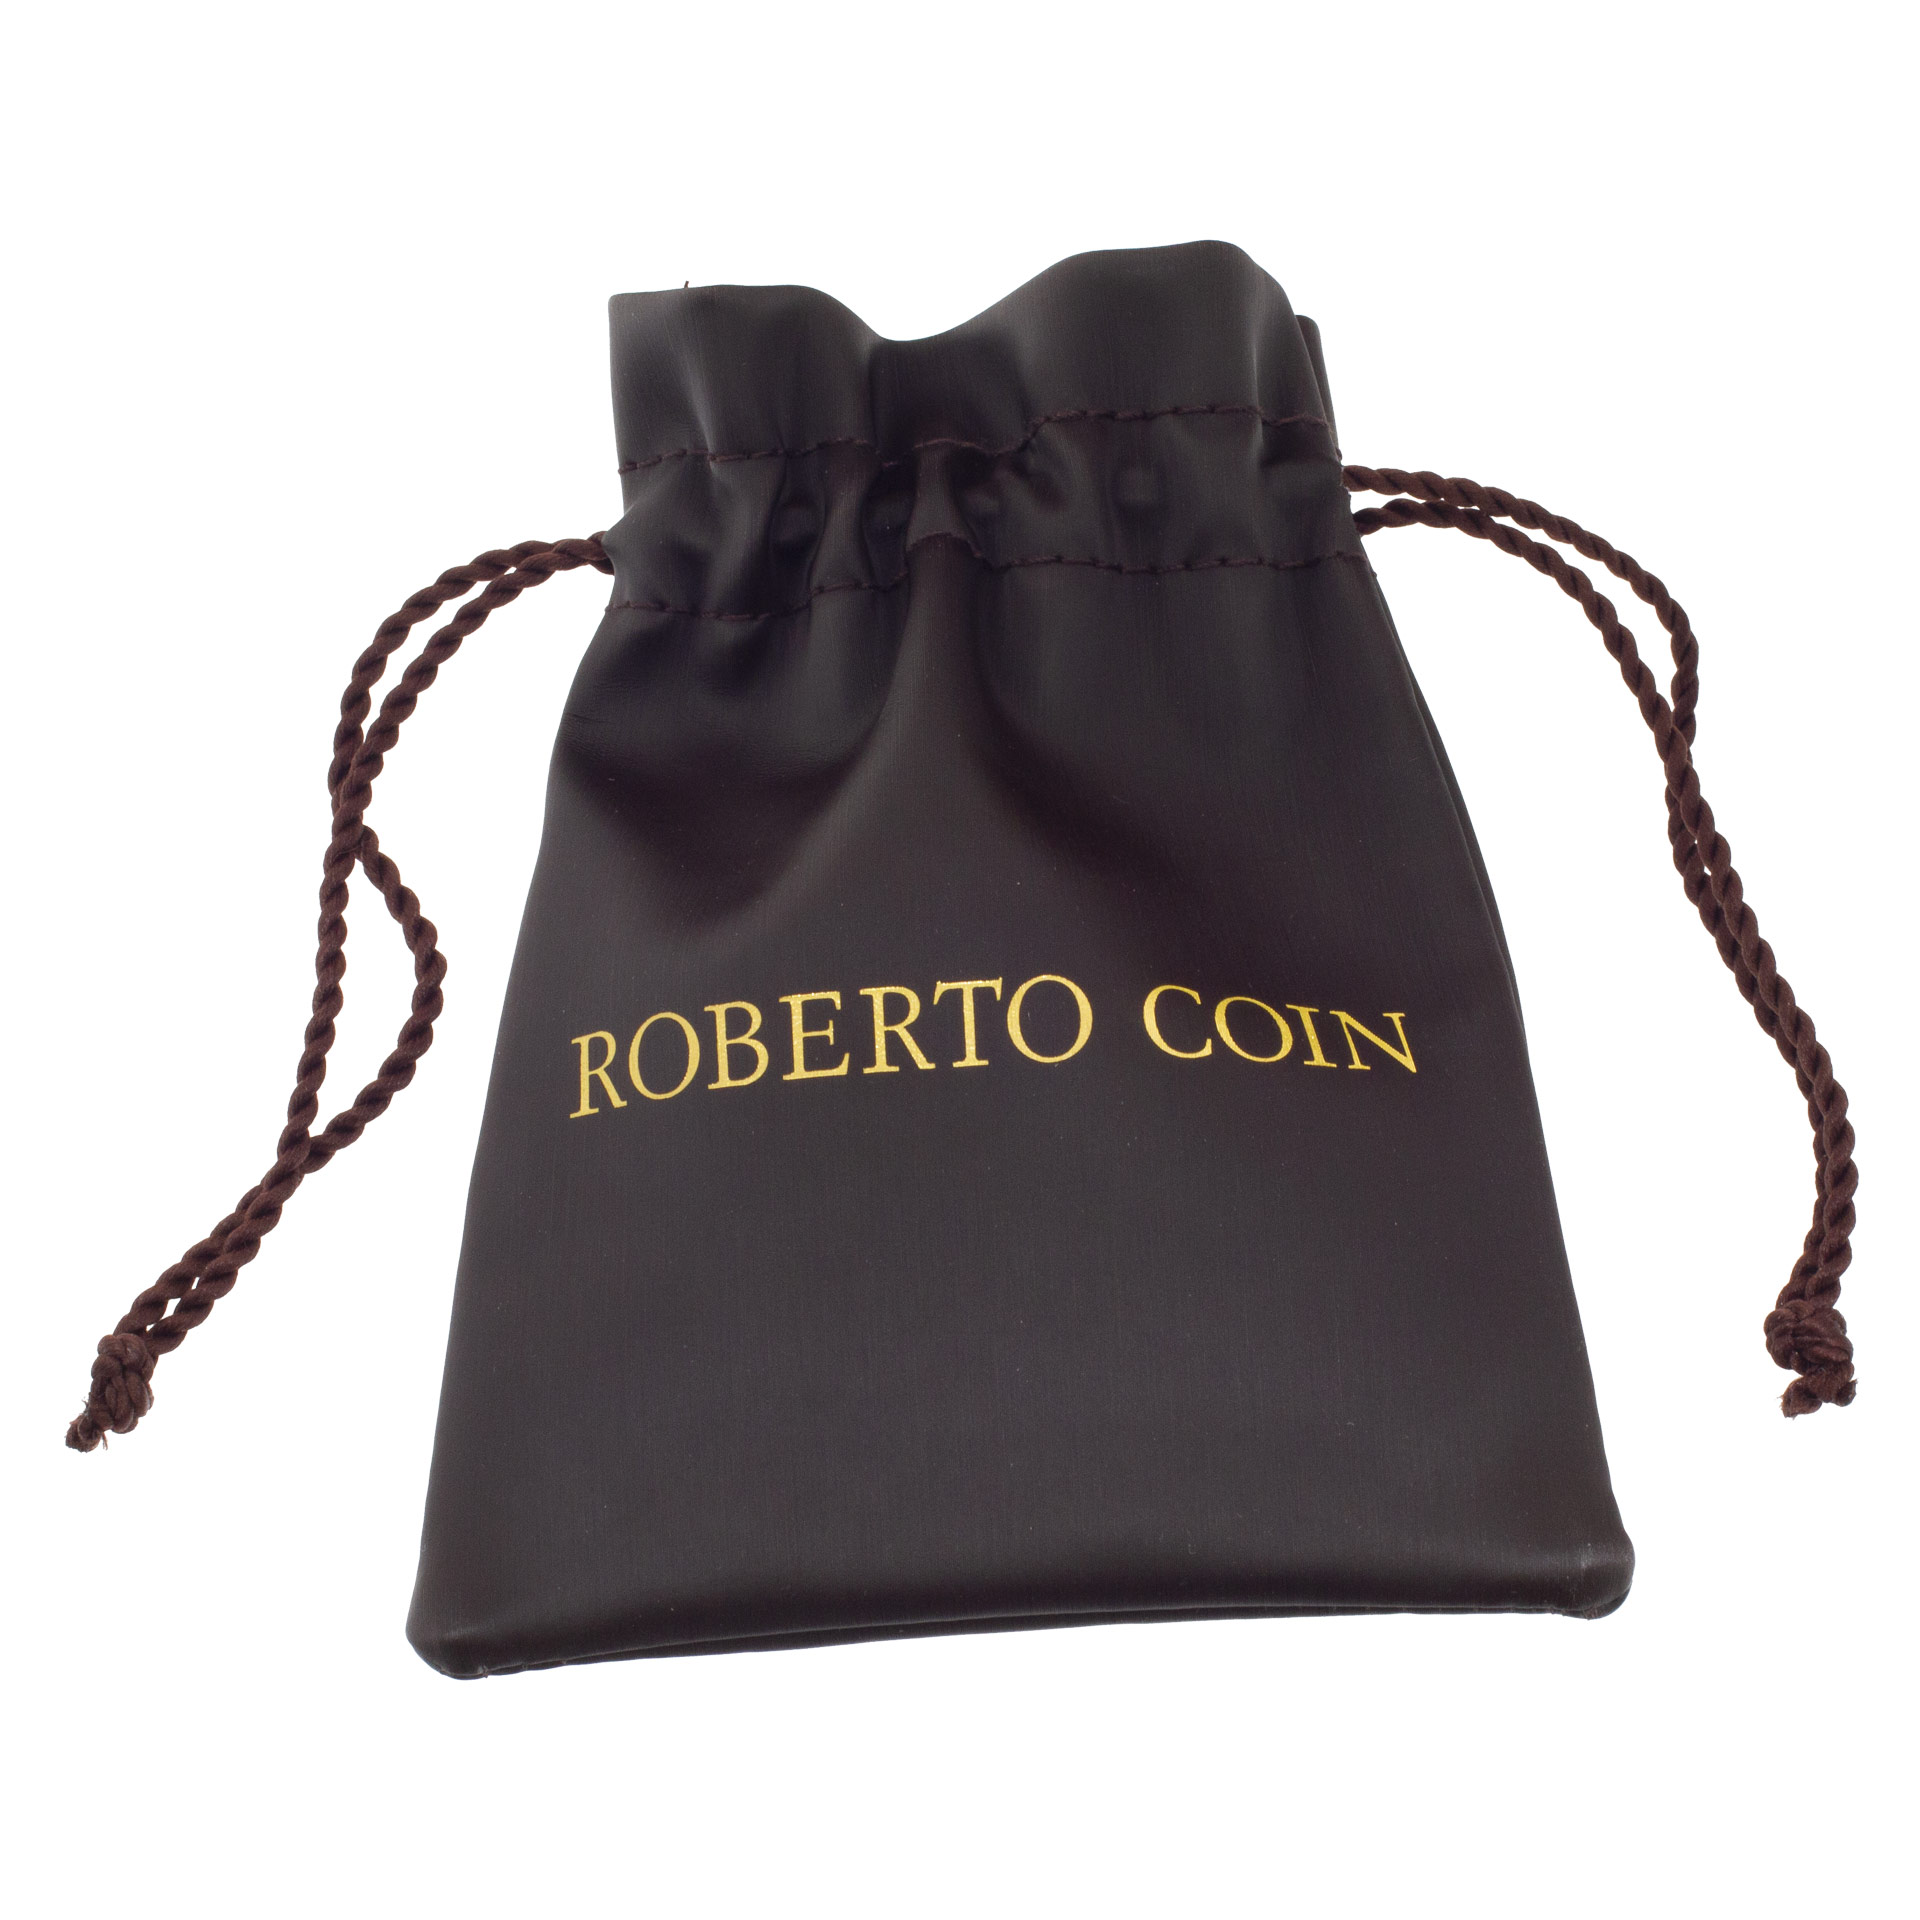 Roberto Coin "Symphony" collection 18K Pois Moi bangle bracelet image 6